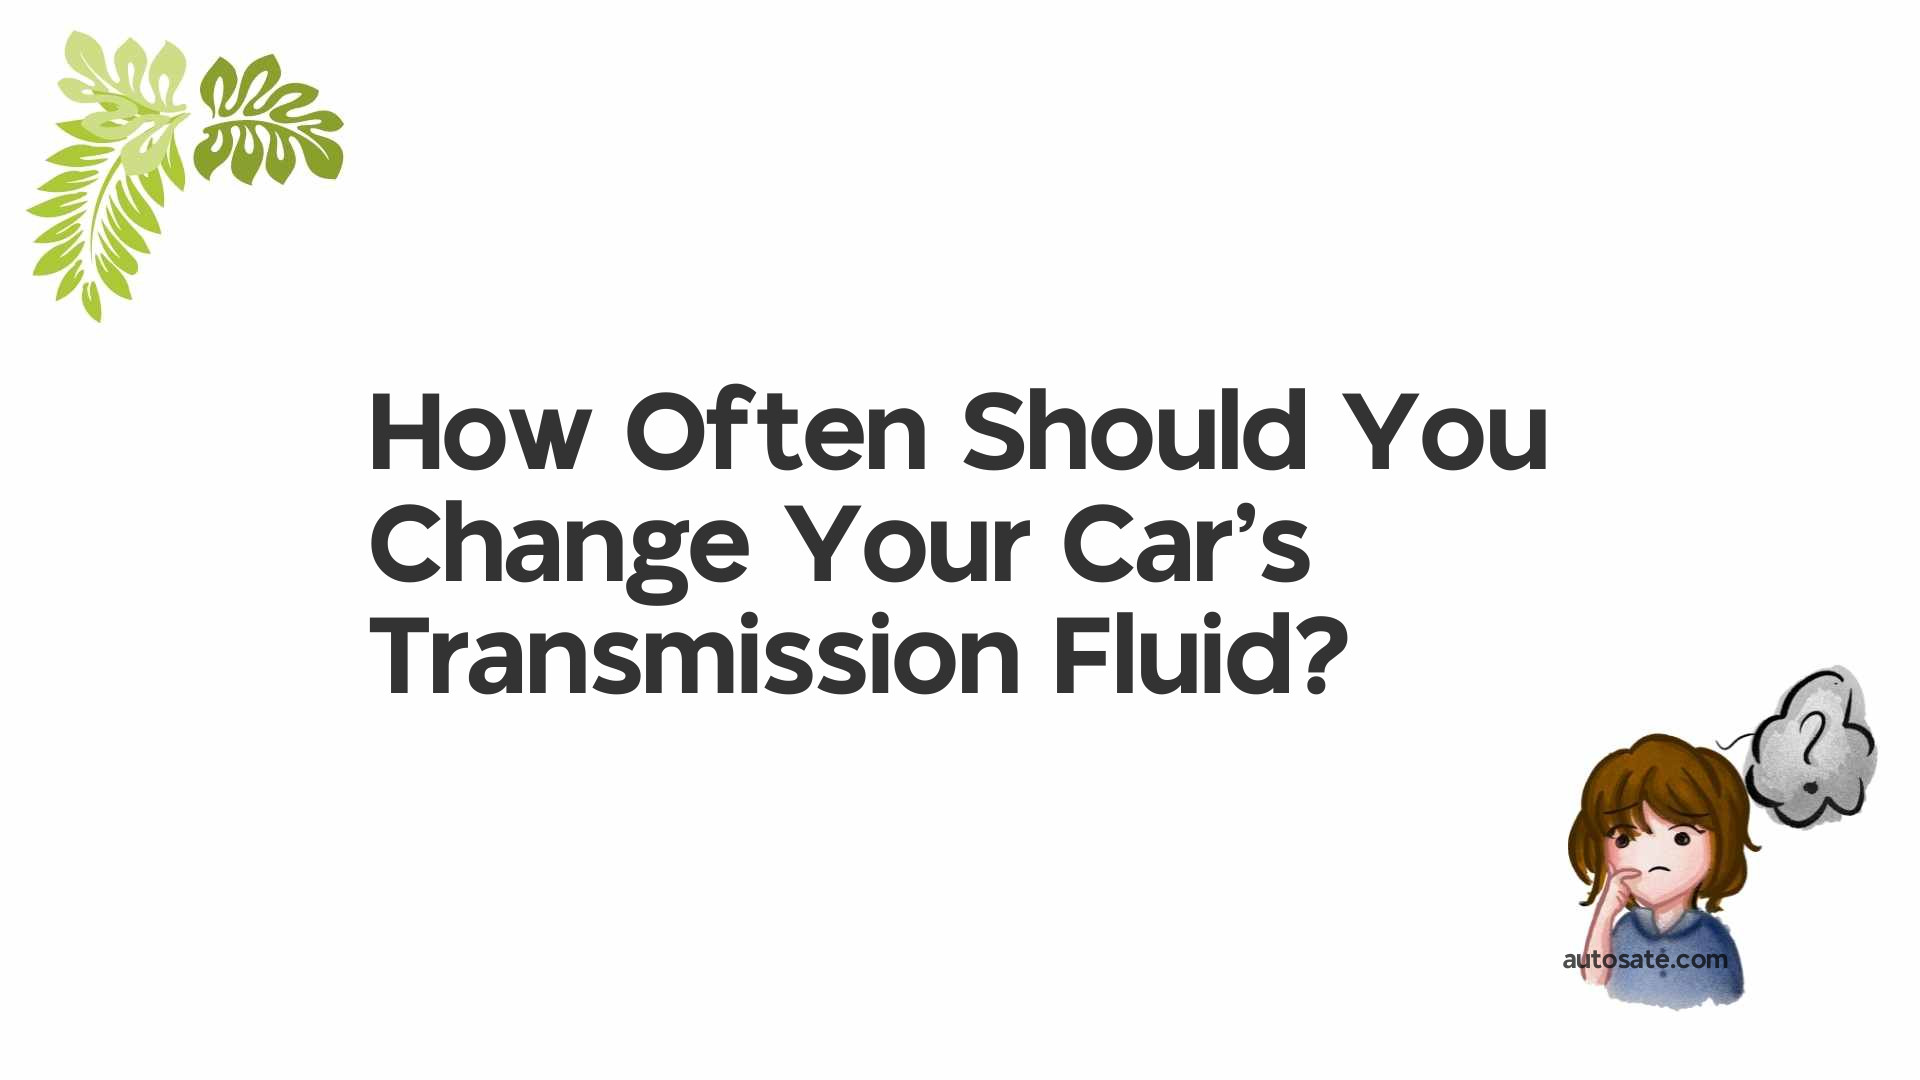 How Often Should You Change Your Car's Transmission Fluid?